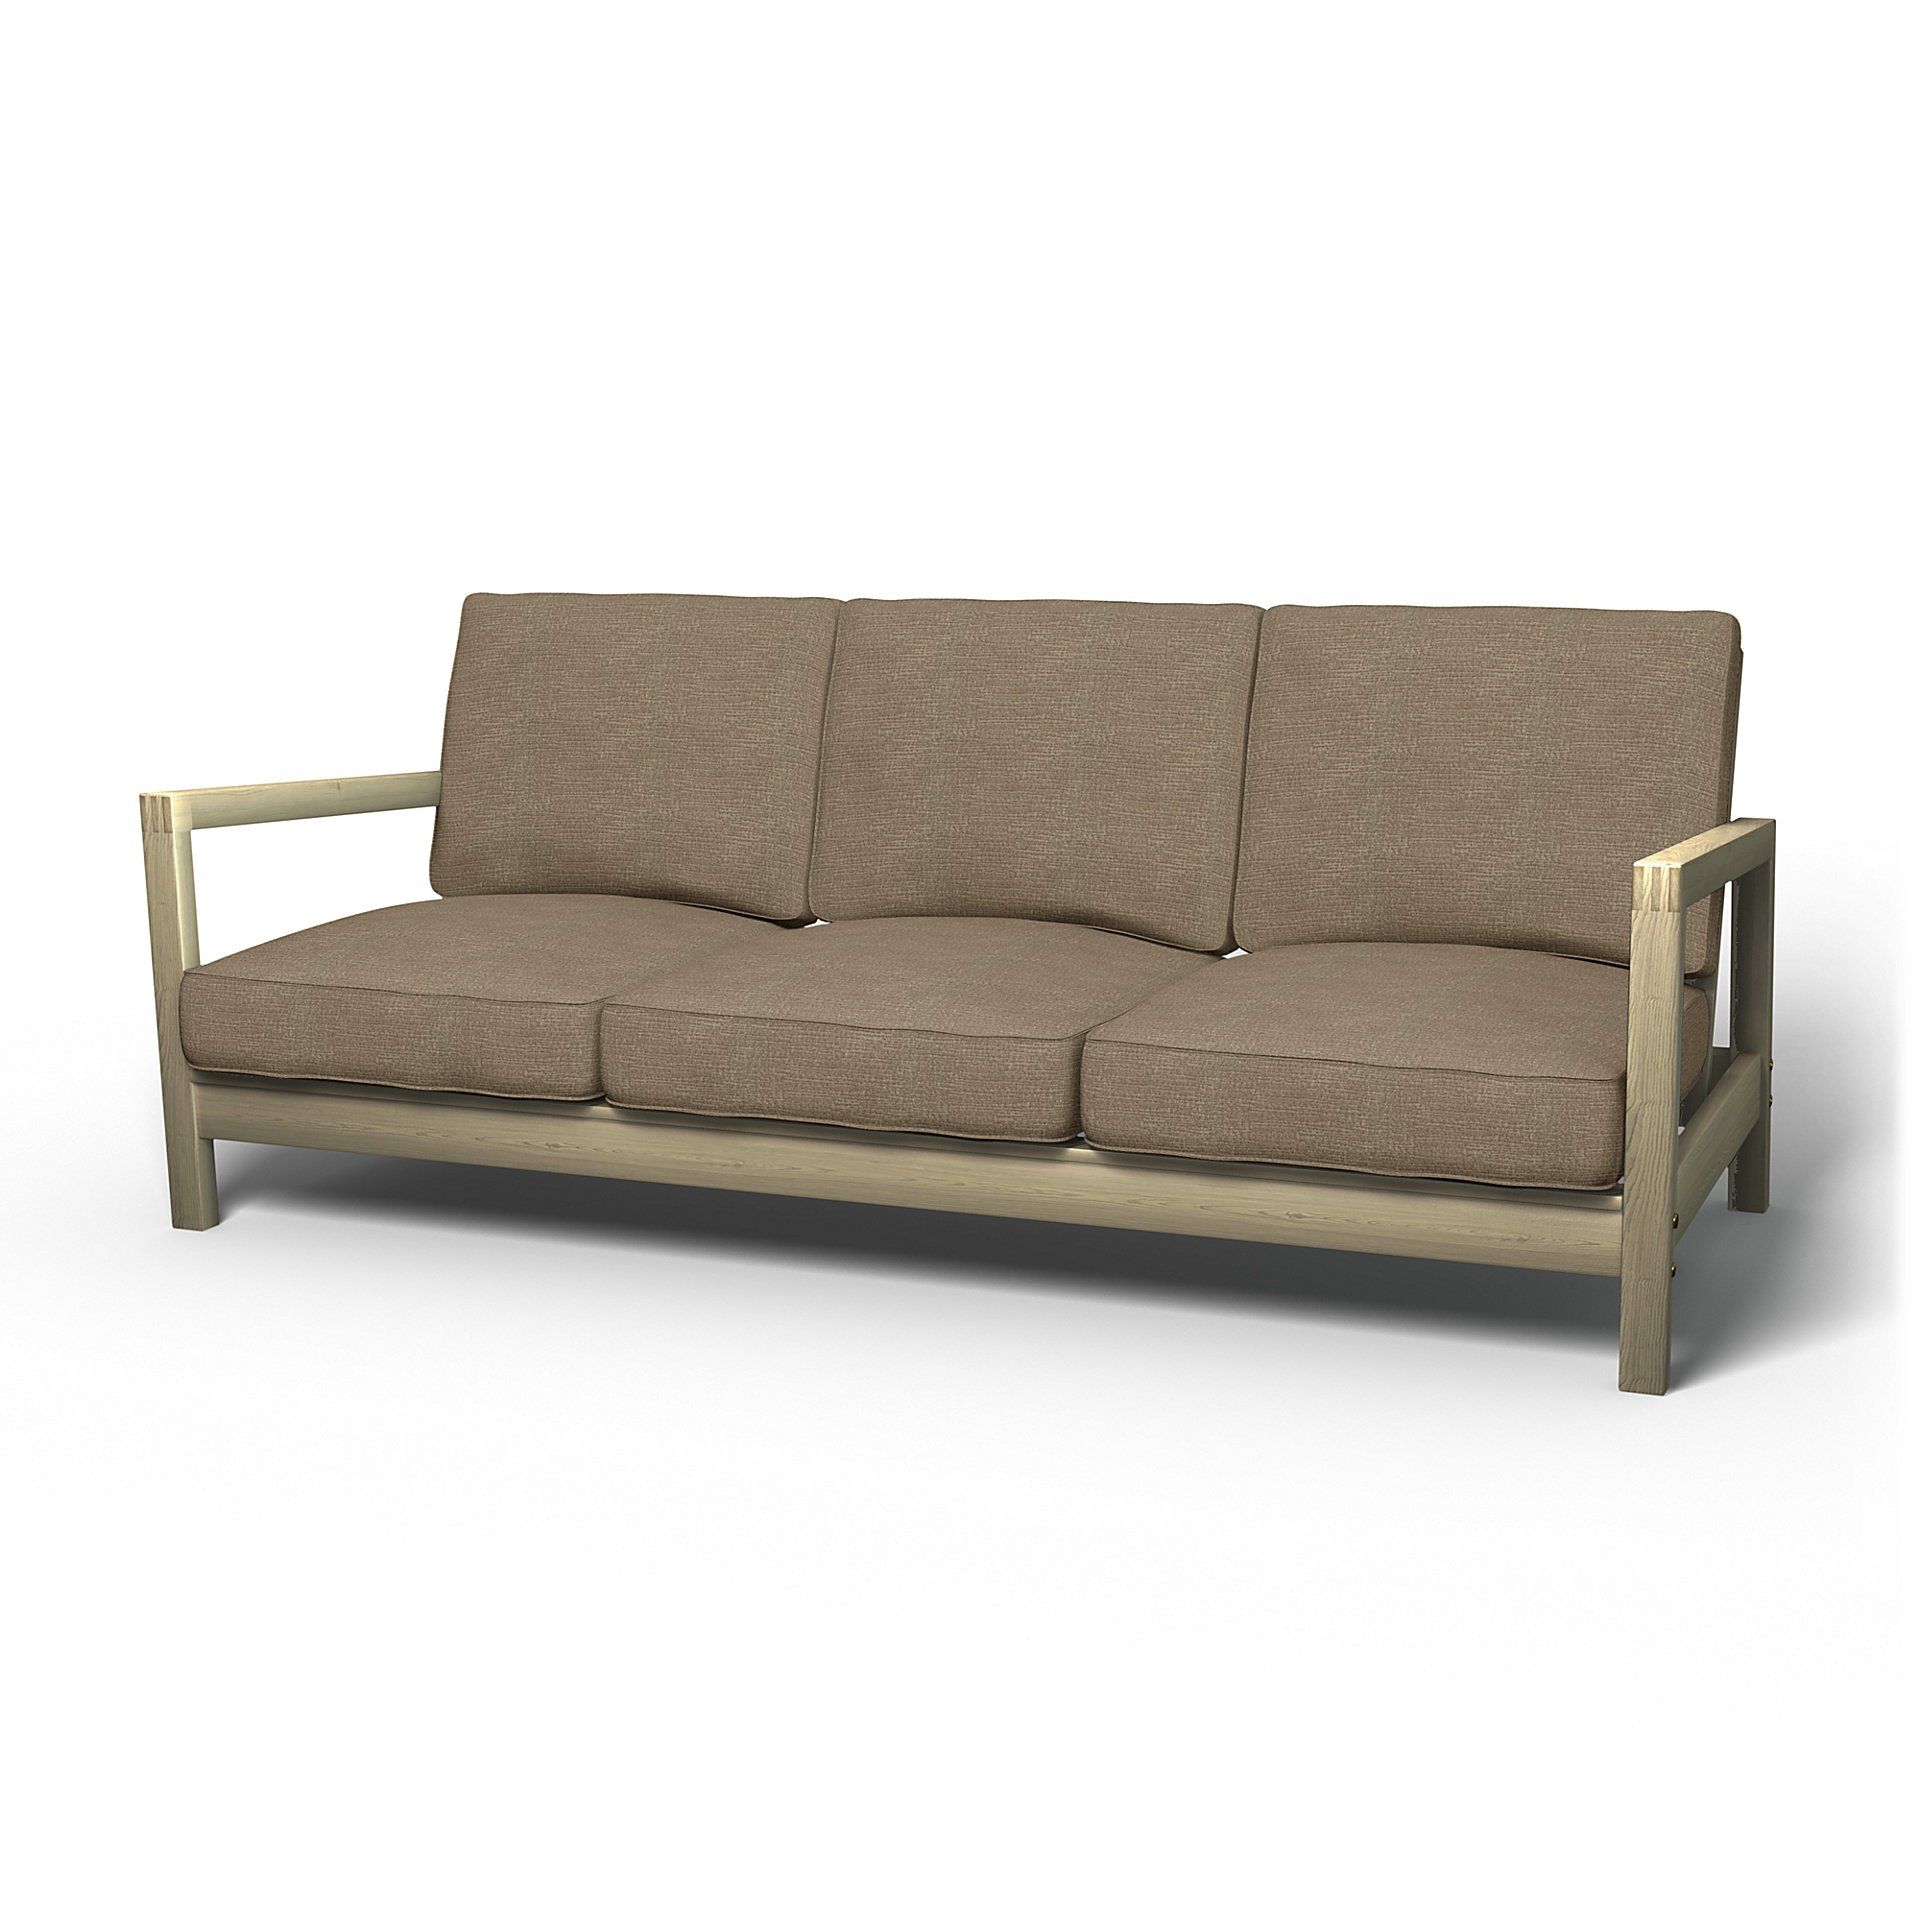 IKEA - Lillberg 3 Seater Sofa Cover, Camel, Boucle & Texture - Bemz